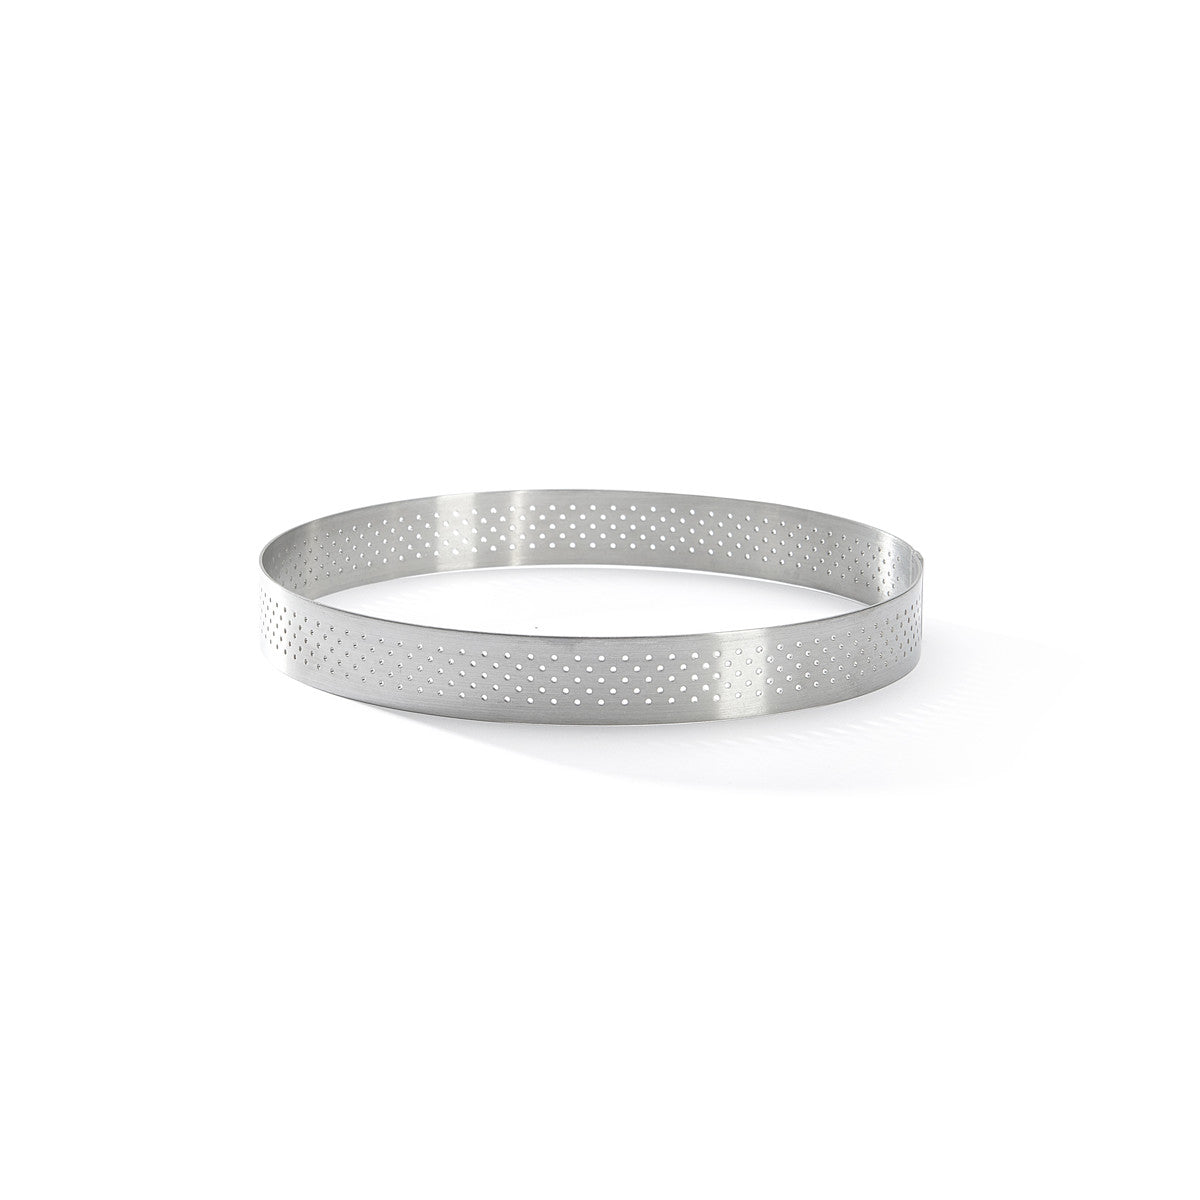 DE BUYER S/S Perforated Round Tart Ring, 6